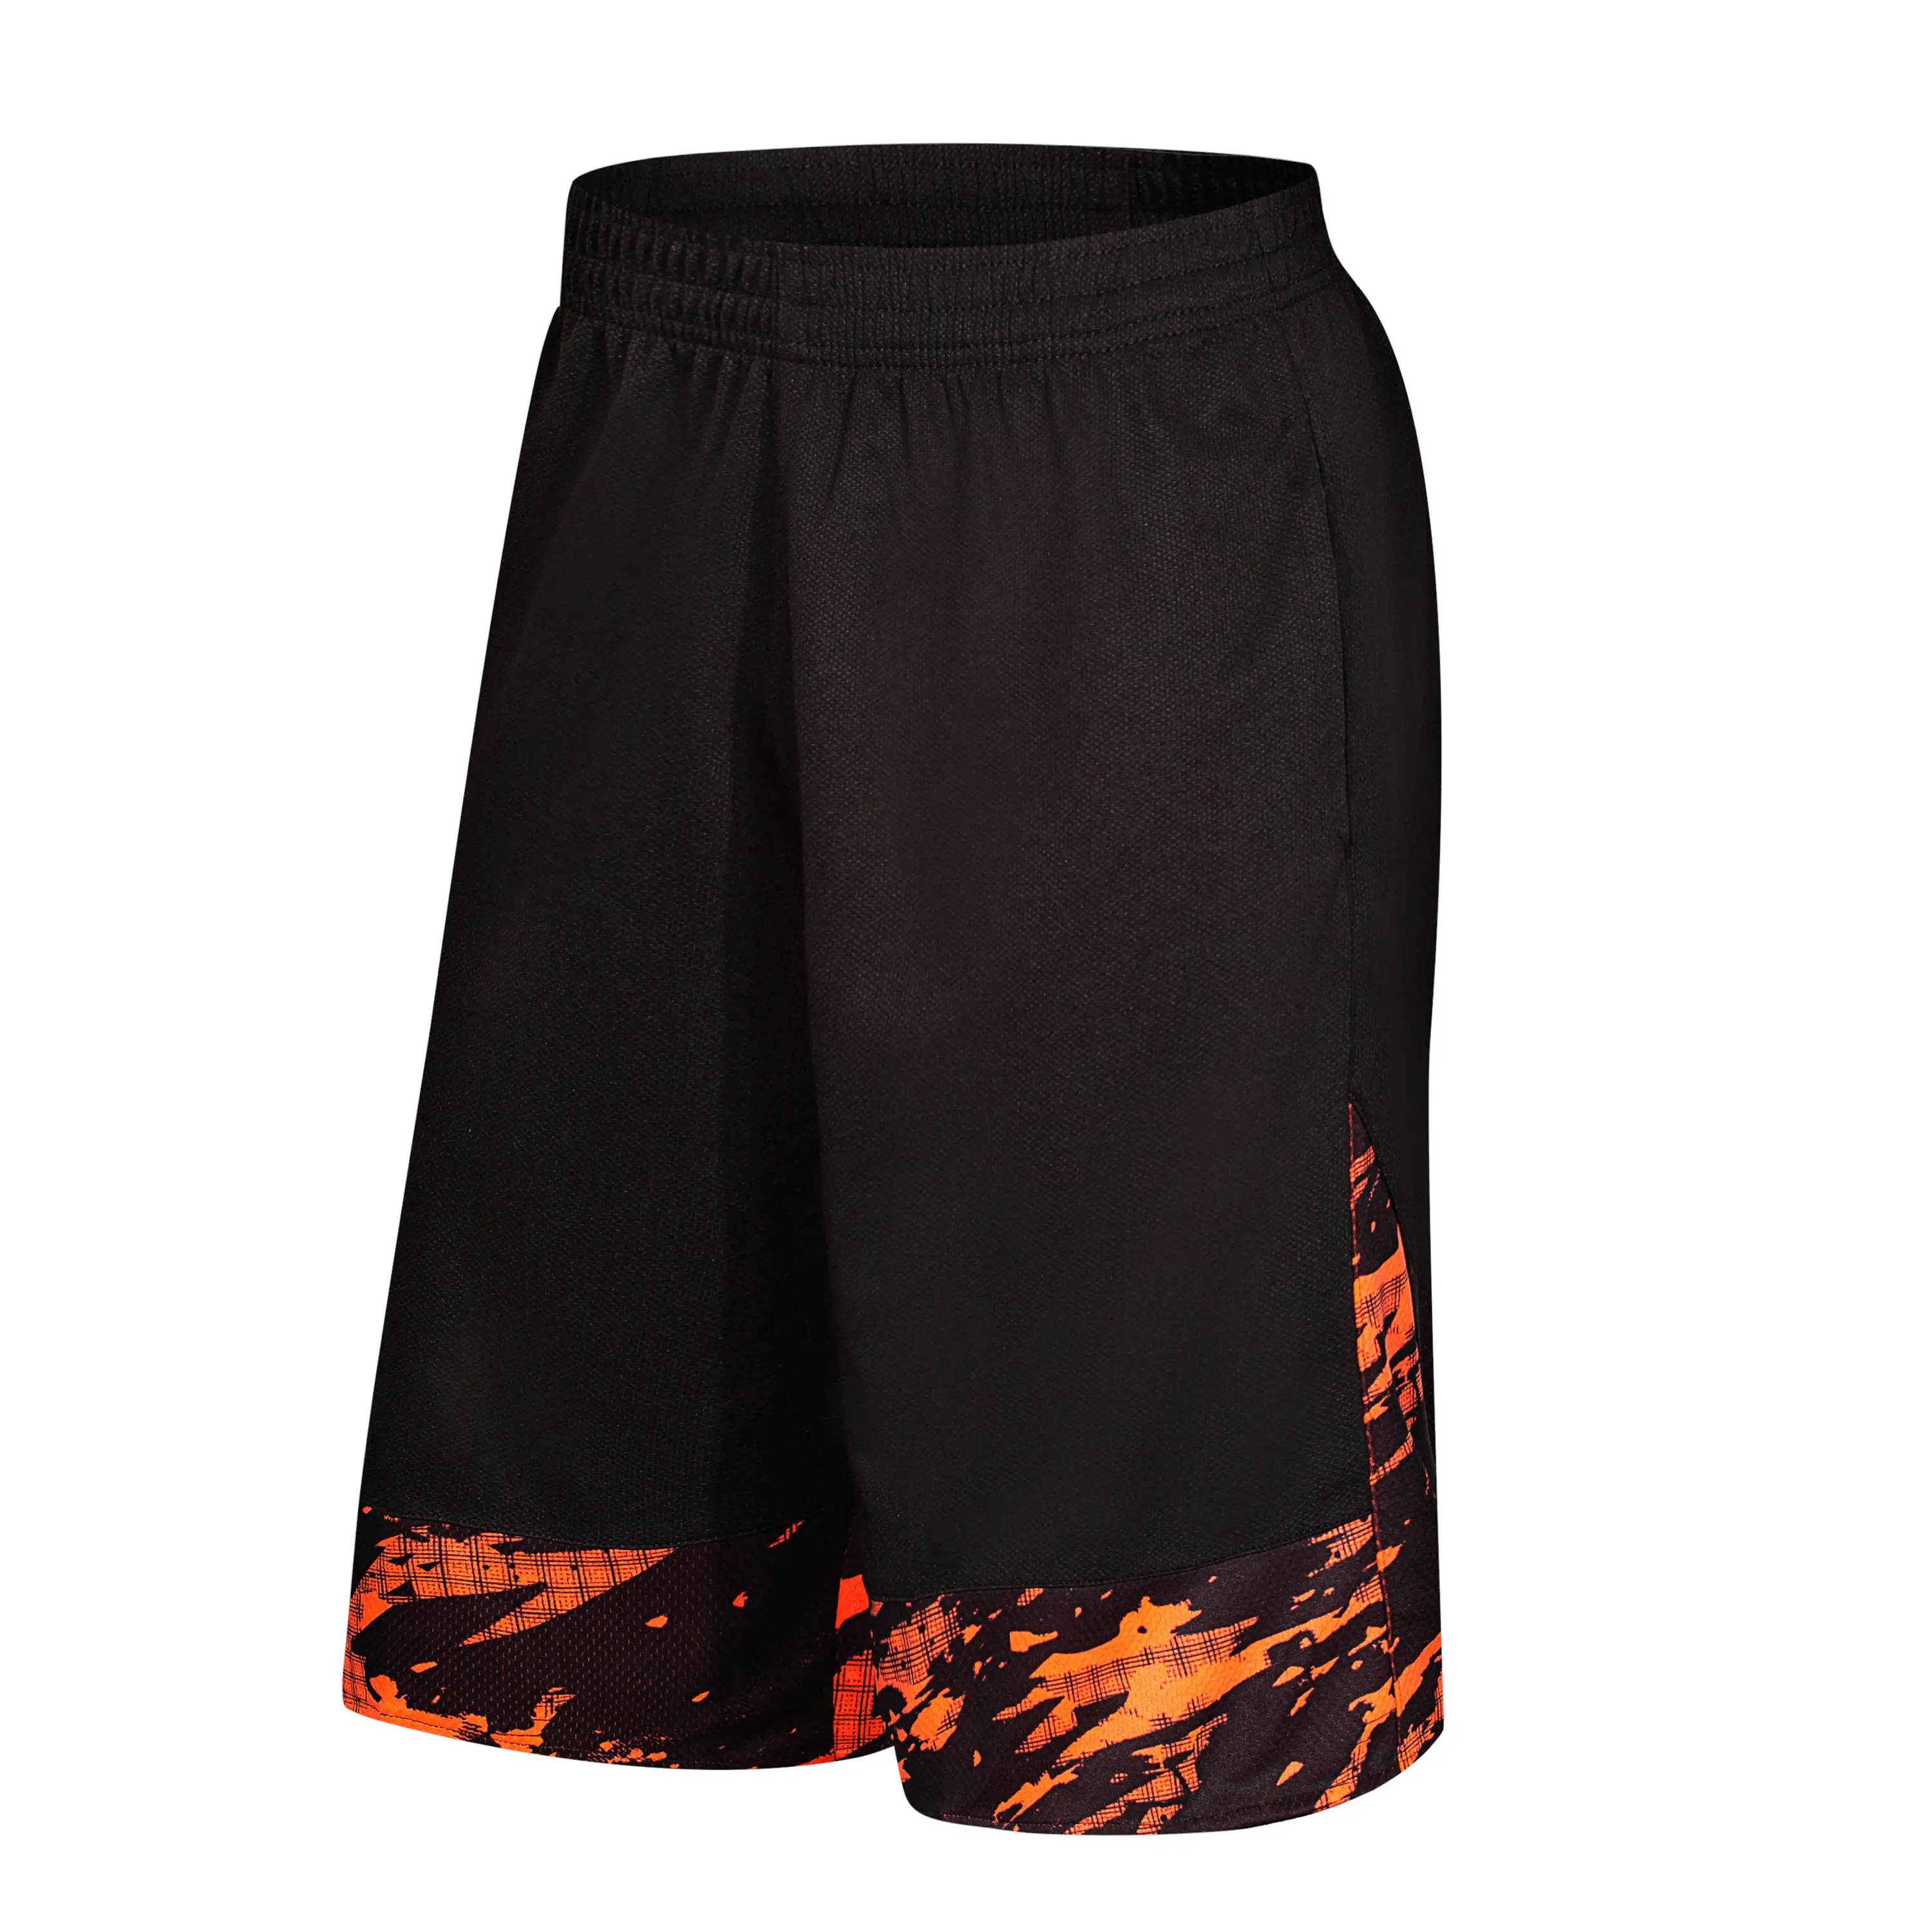 Lava Style Basketball Shorts,Colorful Sport Short Training Panty,running,Exercise Clothes,Breathable Fabrics,Elastic,6 Colors - Цвет: Оранжевый